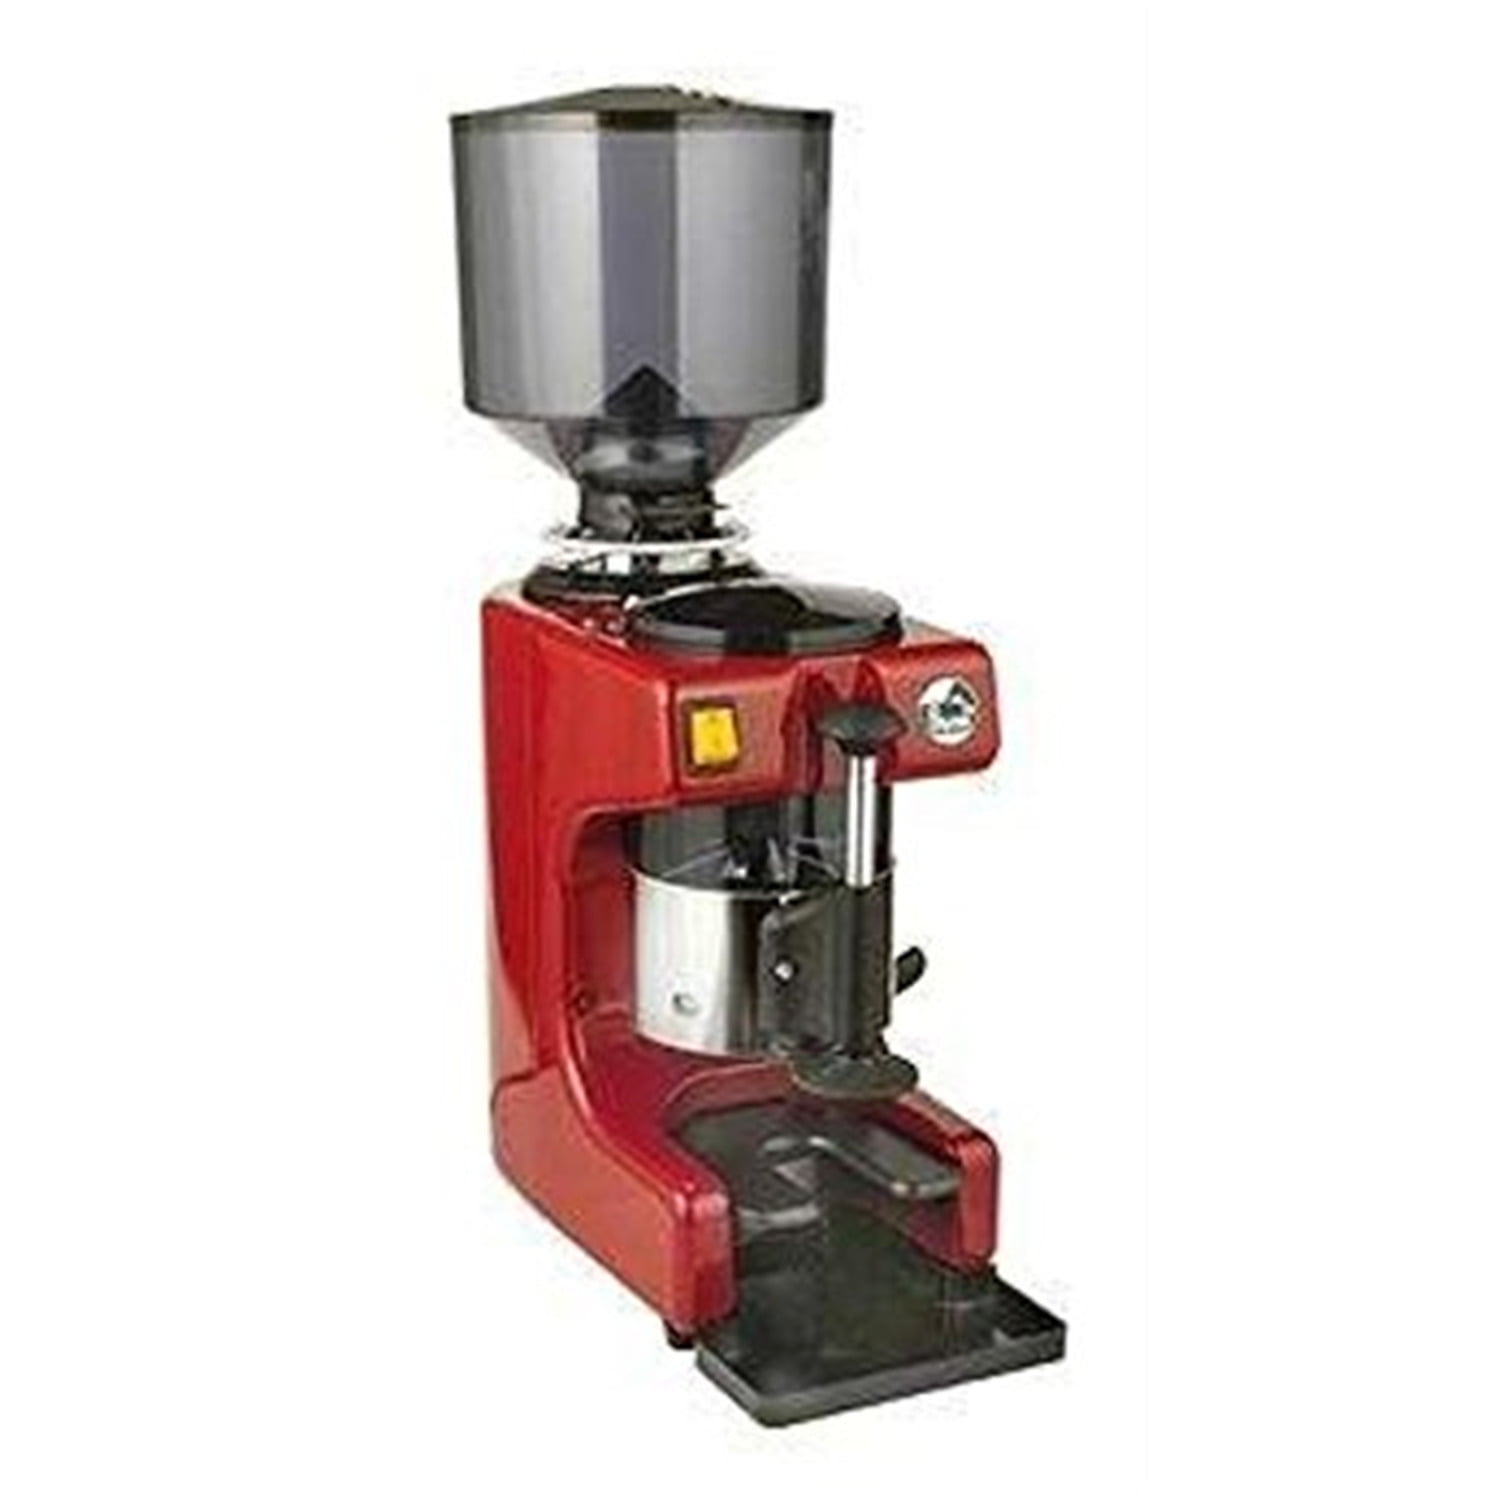 180W Electrical Burr Grinder Espresso Coffee Grinder Machine 19 Gears itop  40